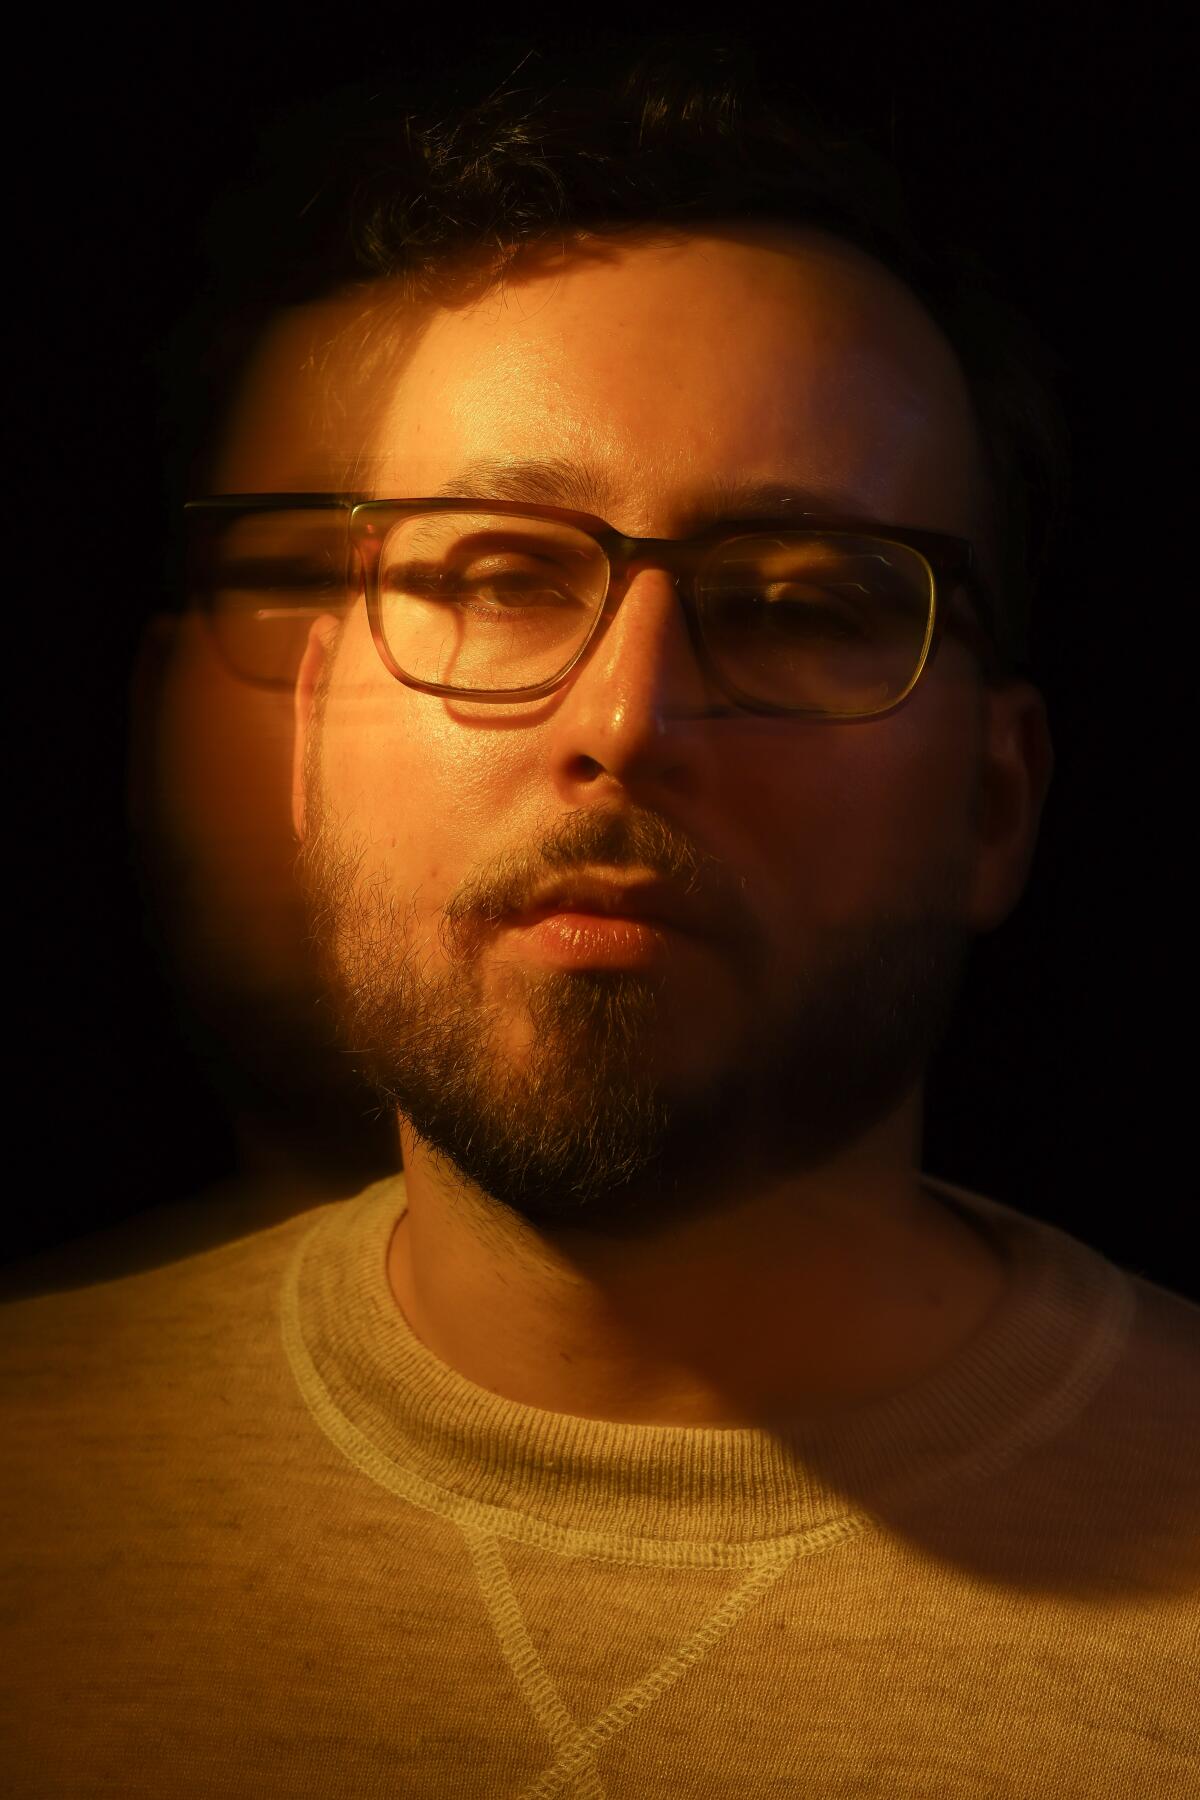 A headshot of a man wearing glasses.